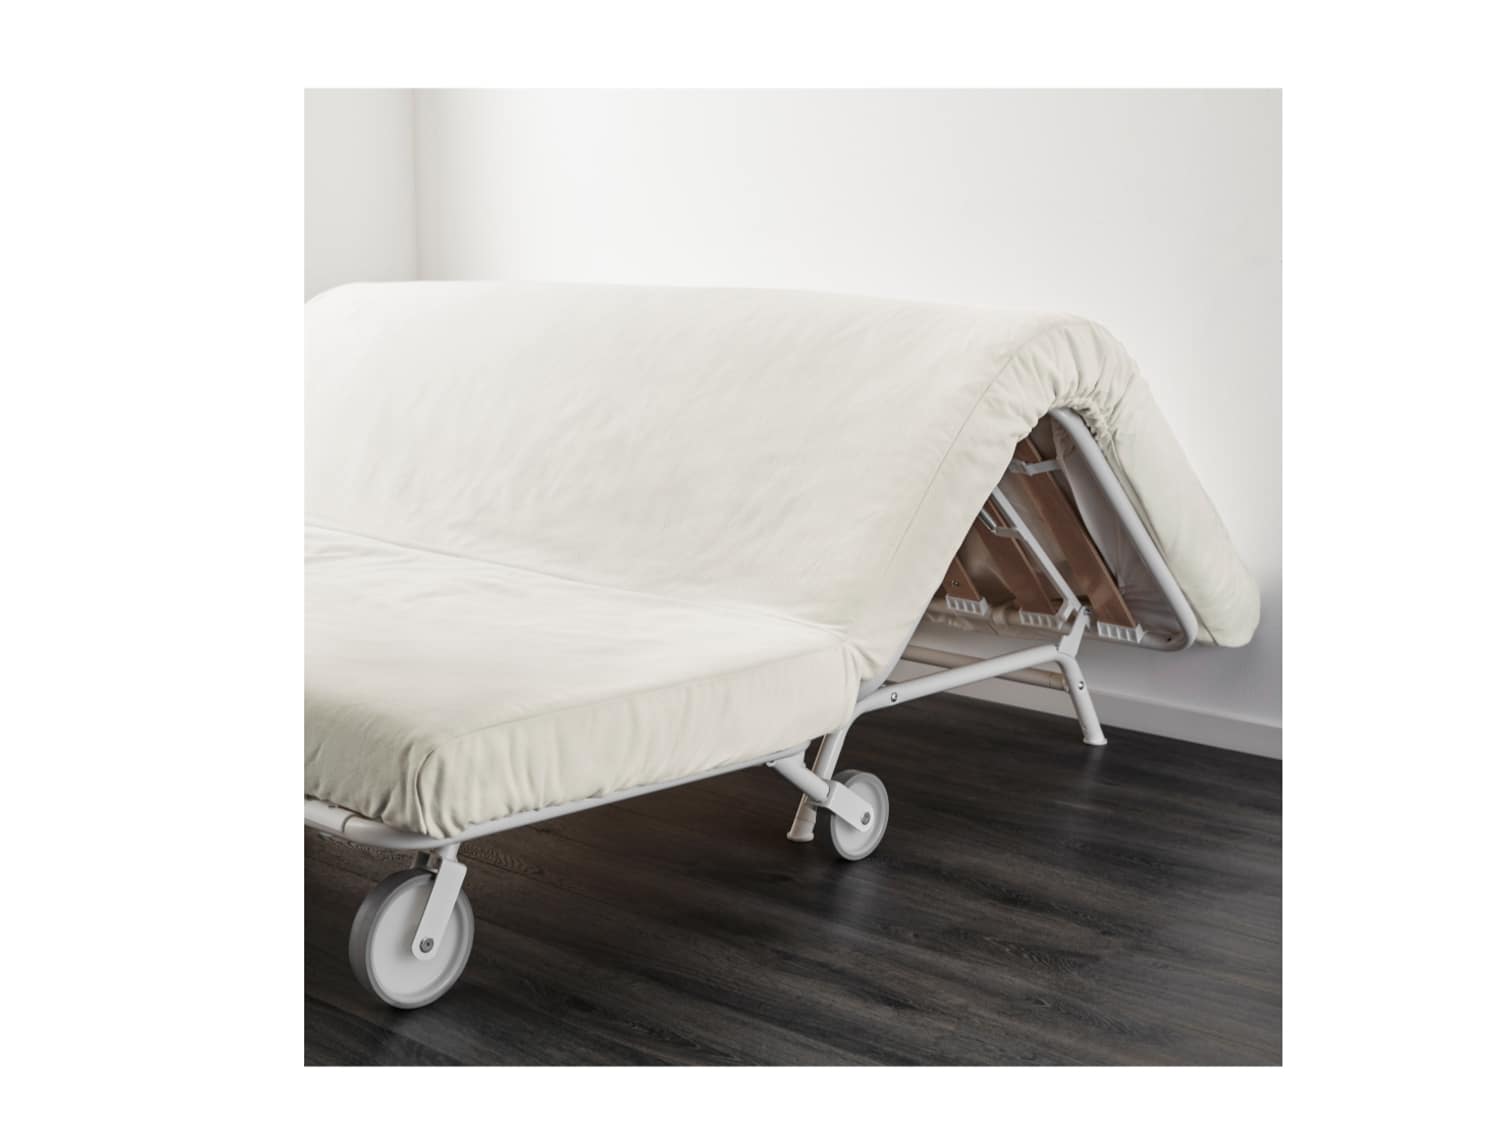 Ikea PS Sleeper Sofa - White - Apartment Therapy's Bazaar.